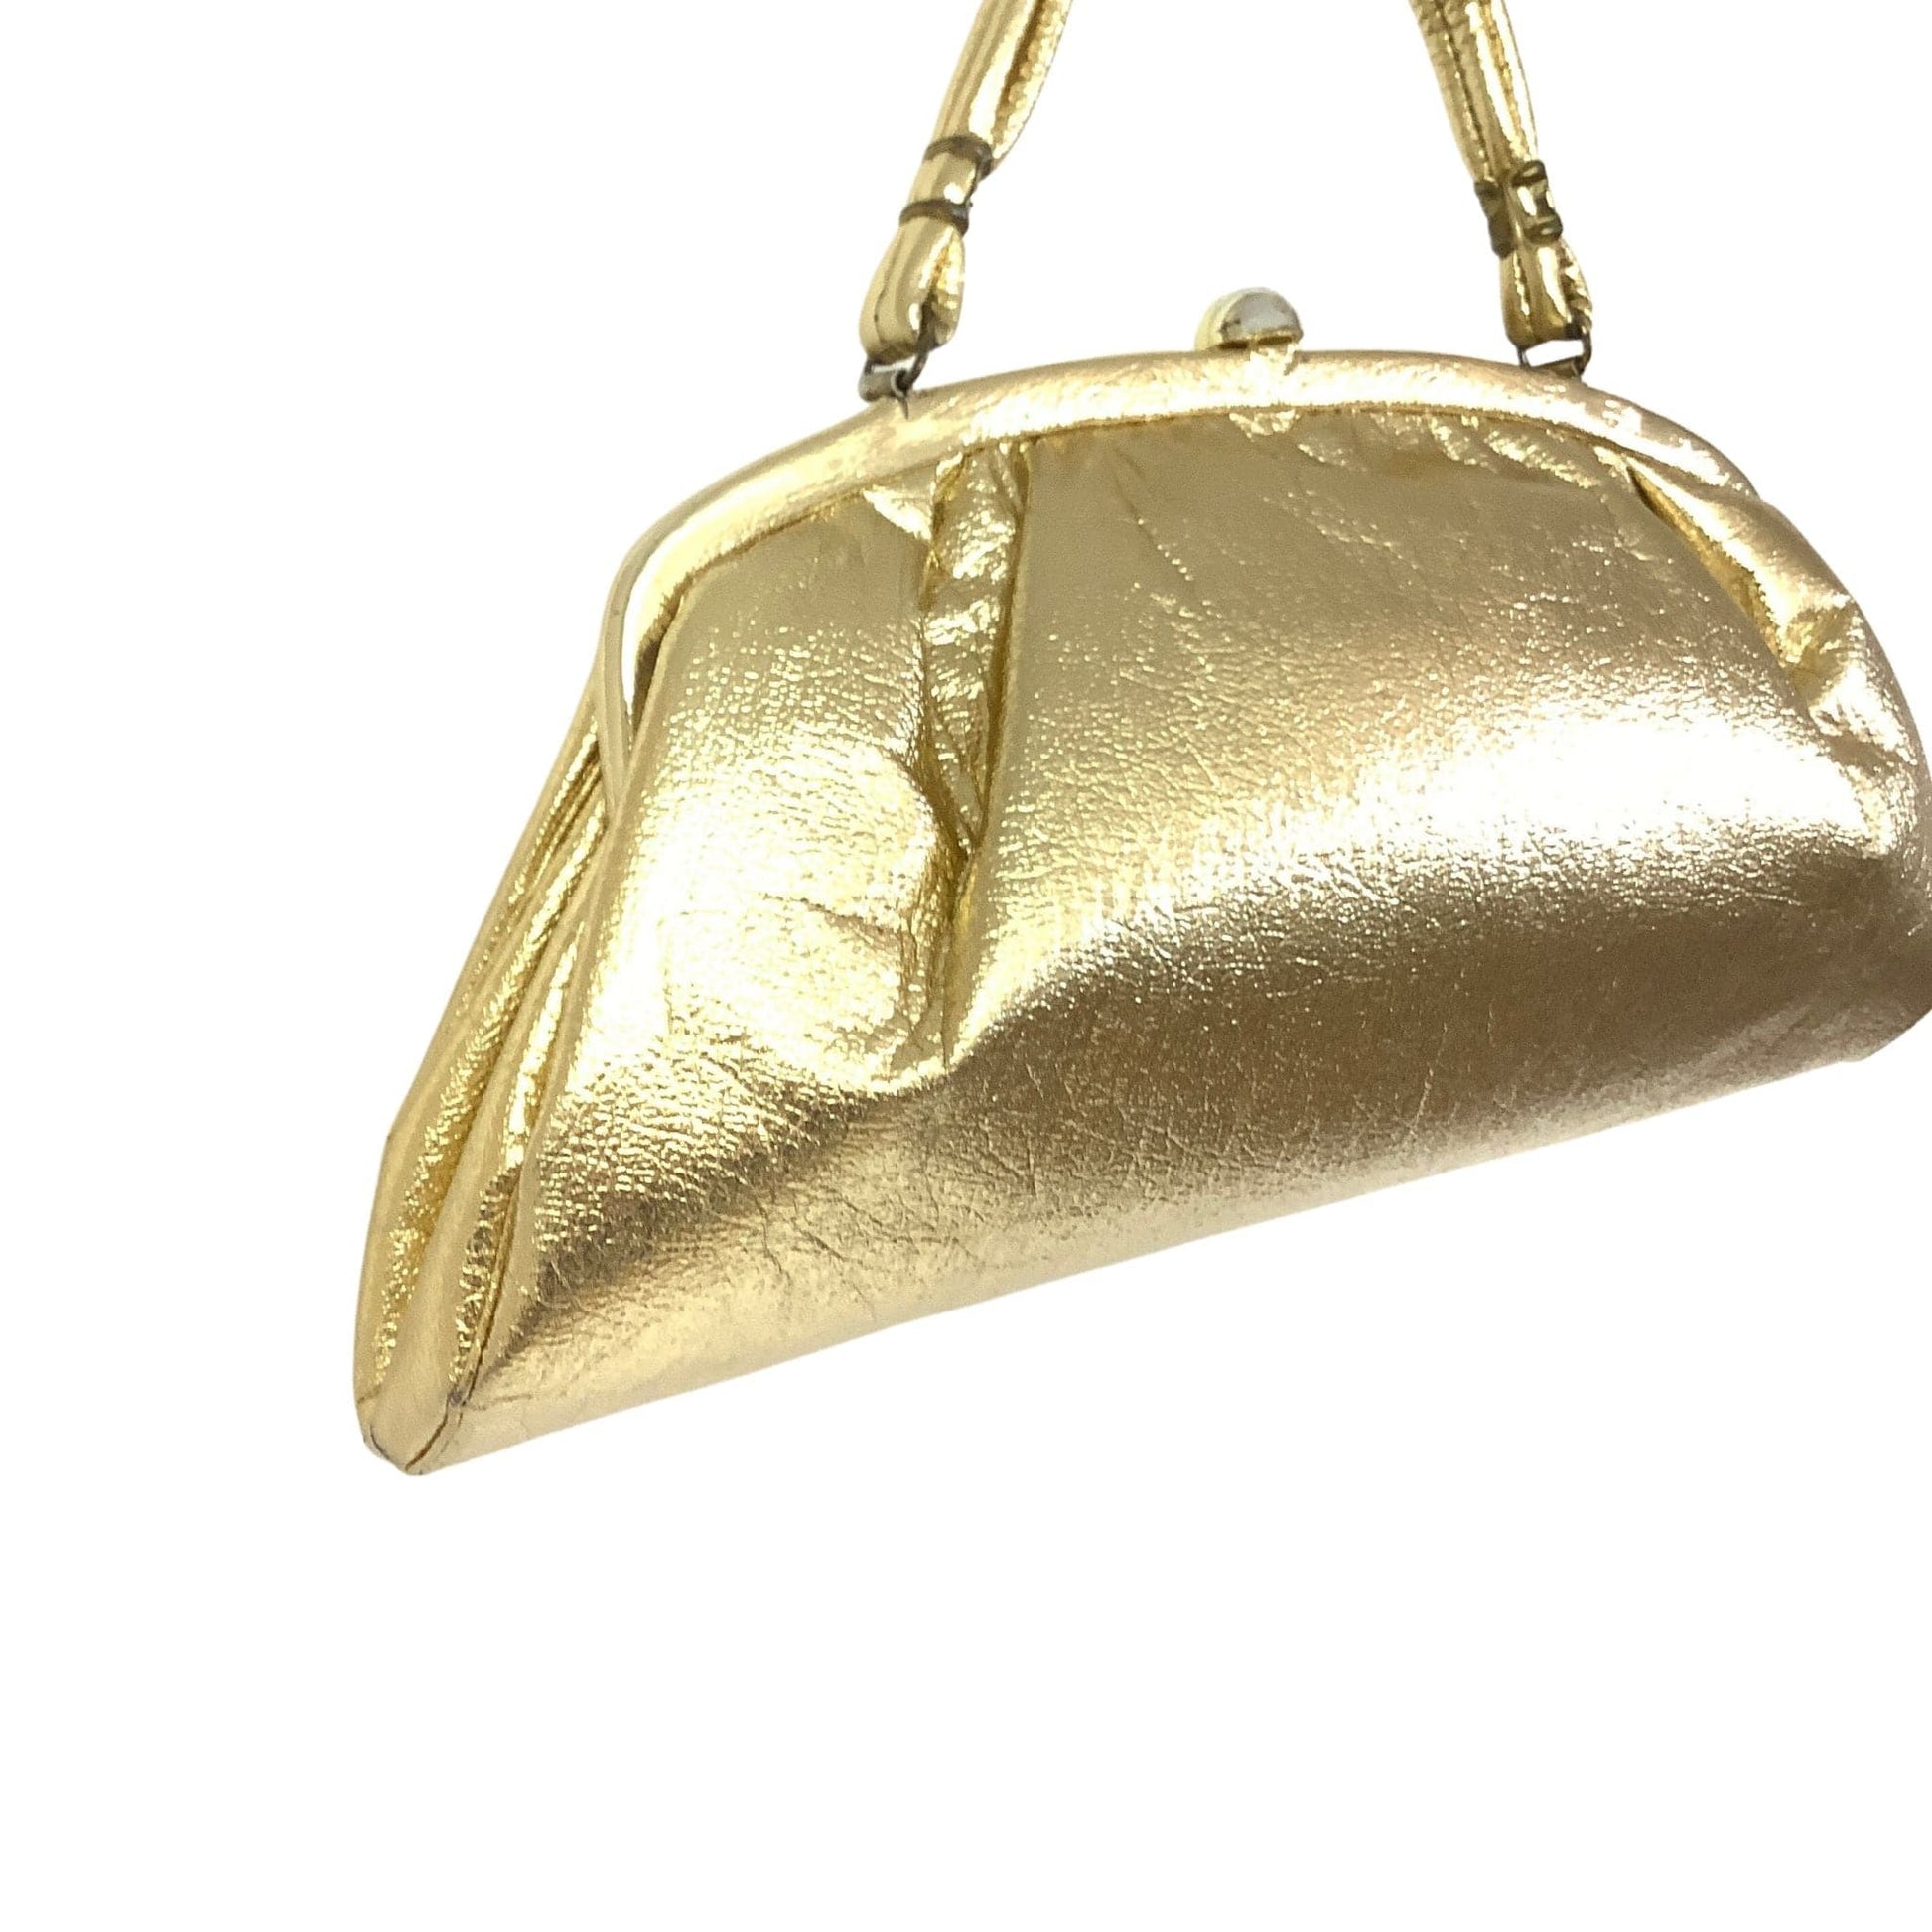 1950s Metallic Gold Handbag Gold / Man Made / Vintage 1950s